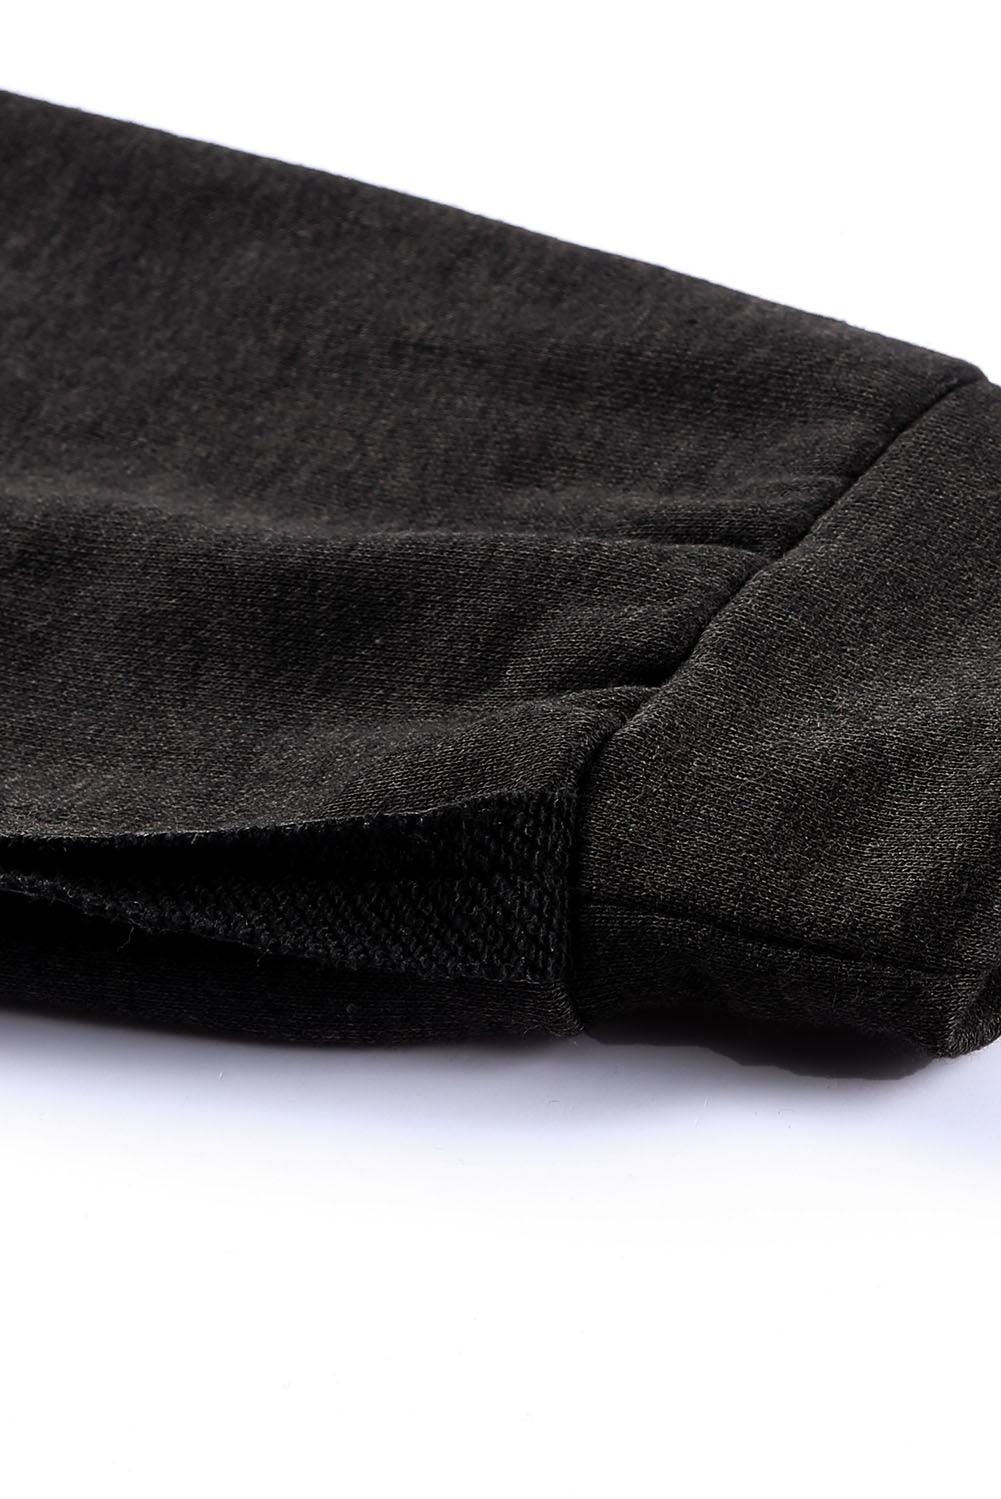 Exposed Seam Drawstring Hooded Jacket with Pockets - BELLATRENDZ